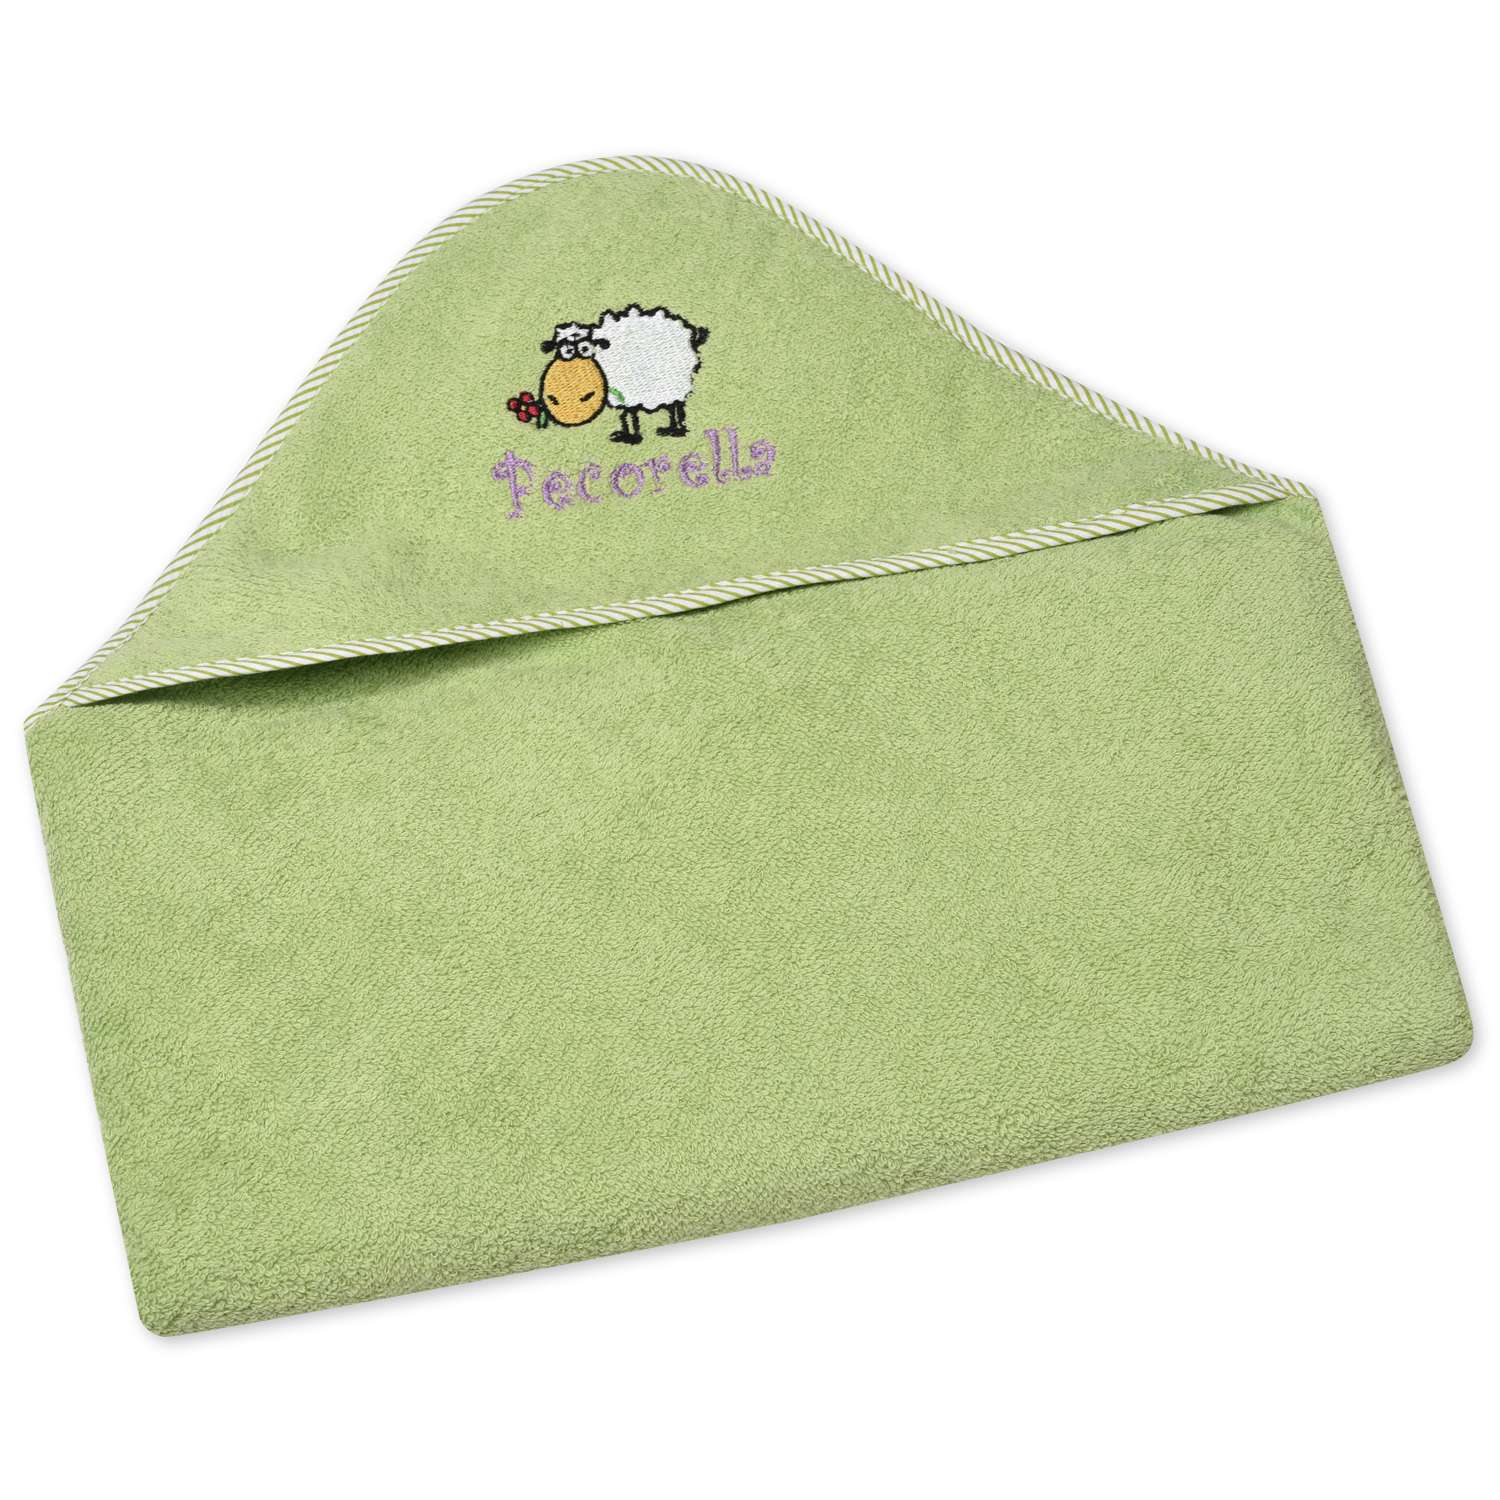 Полотенце с капюшоном Pecorella Зеленое - фото 1